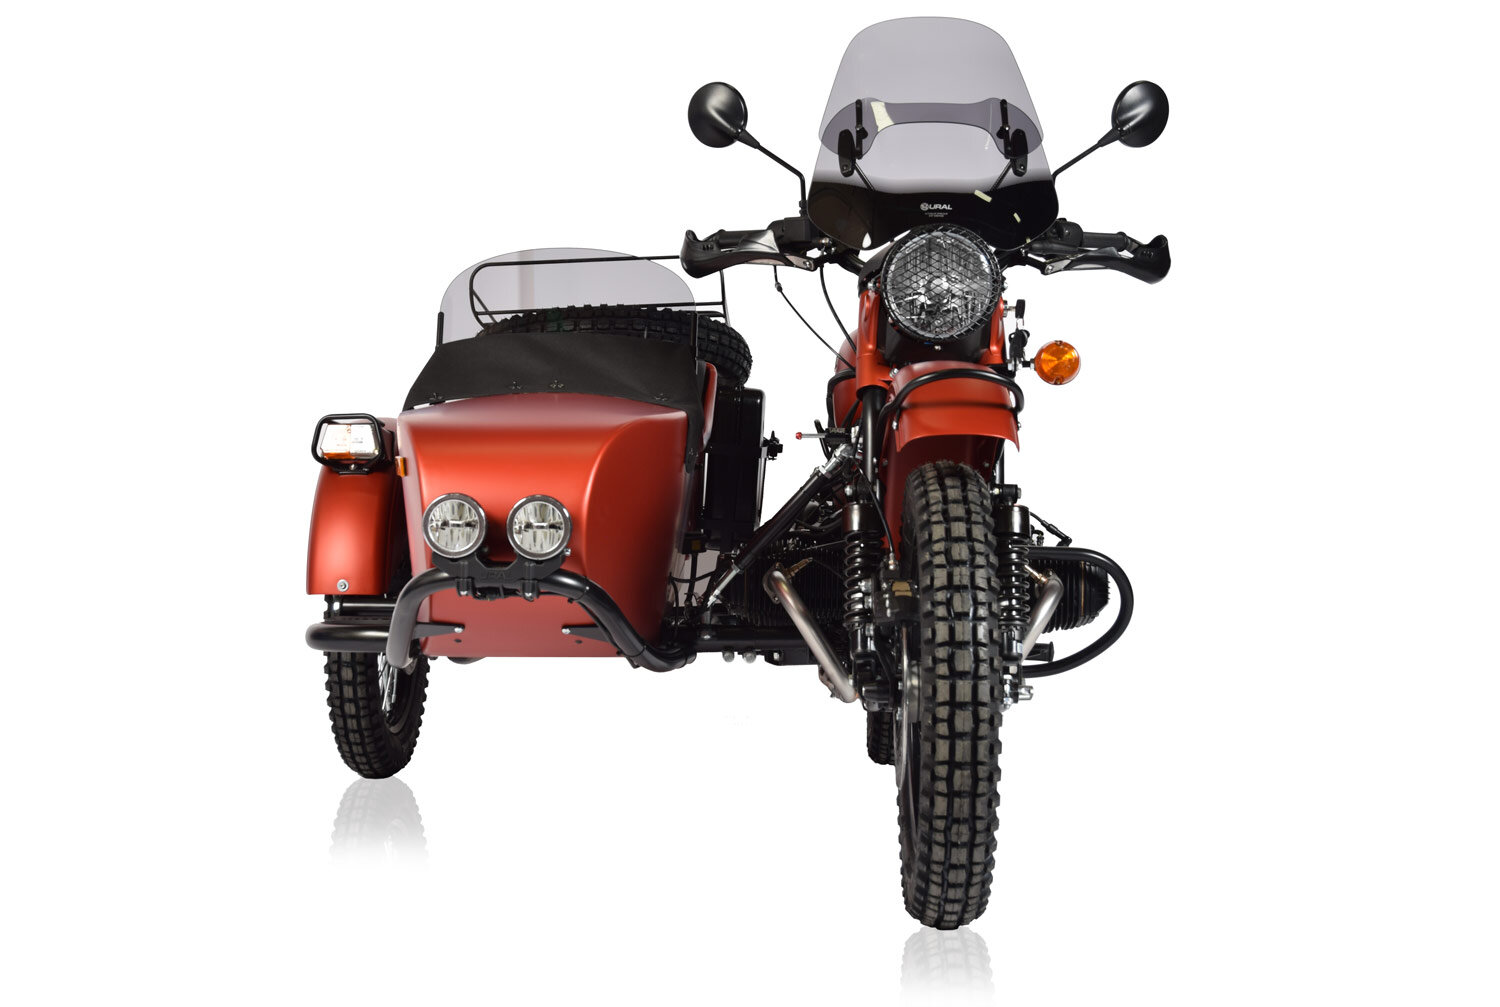 Ural Sidecar Trike Gear-Up Deluxe Bike Motorcycle Cover